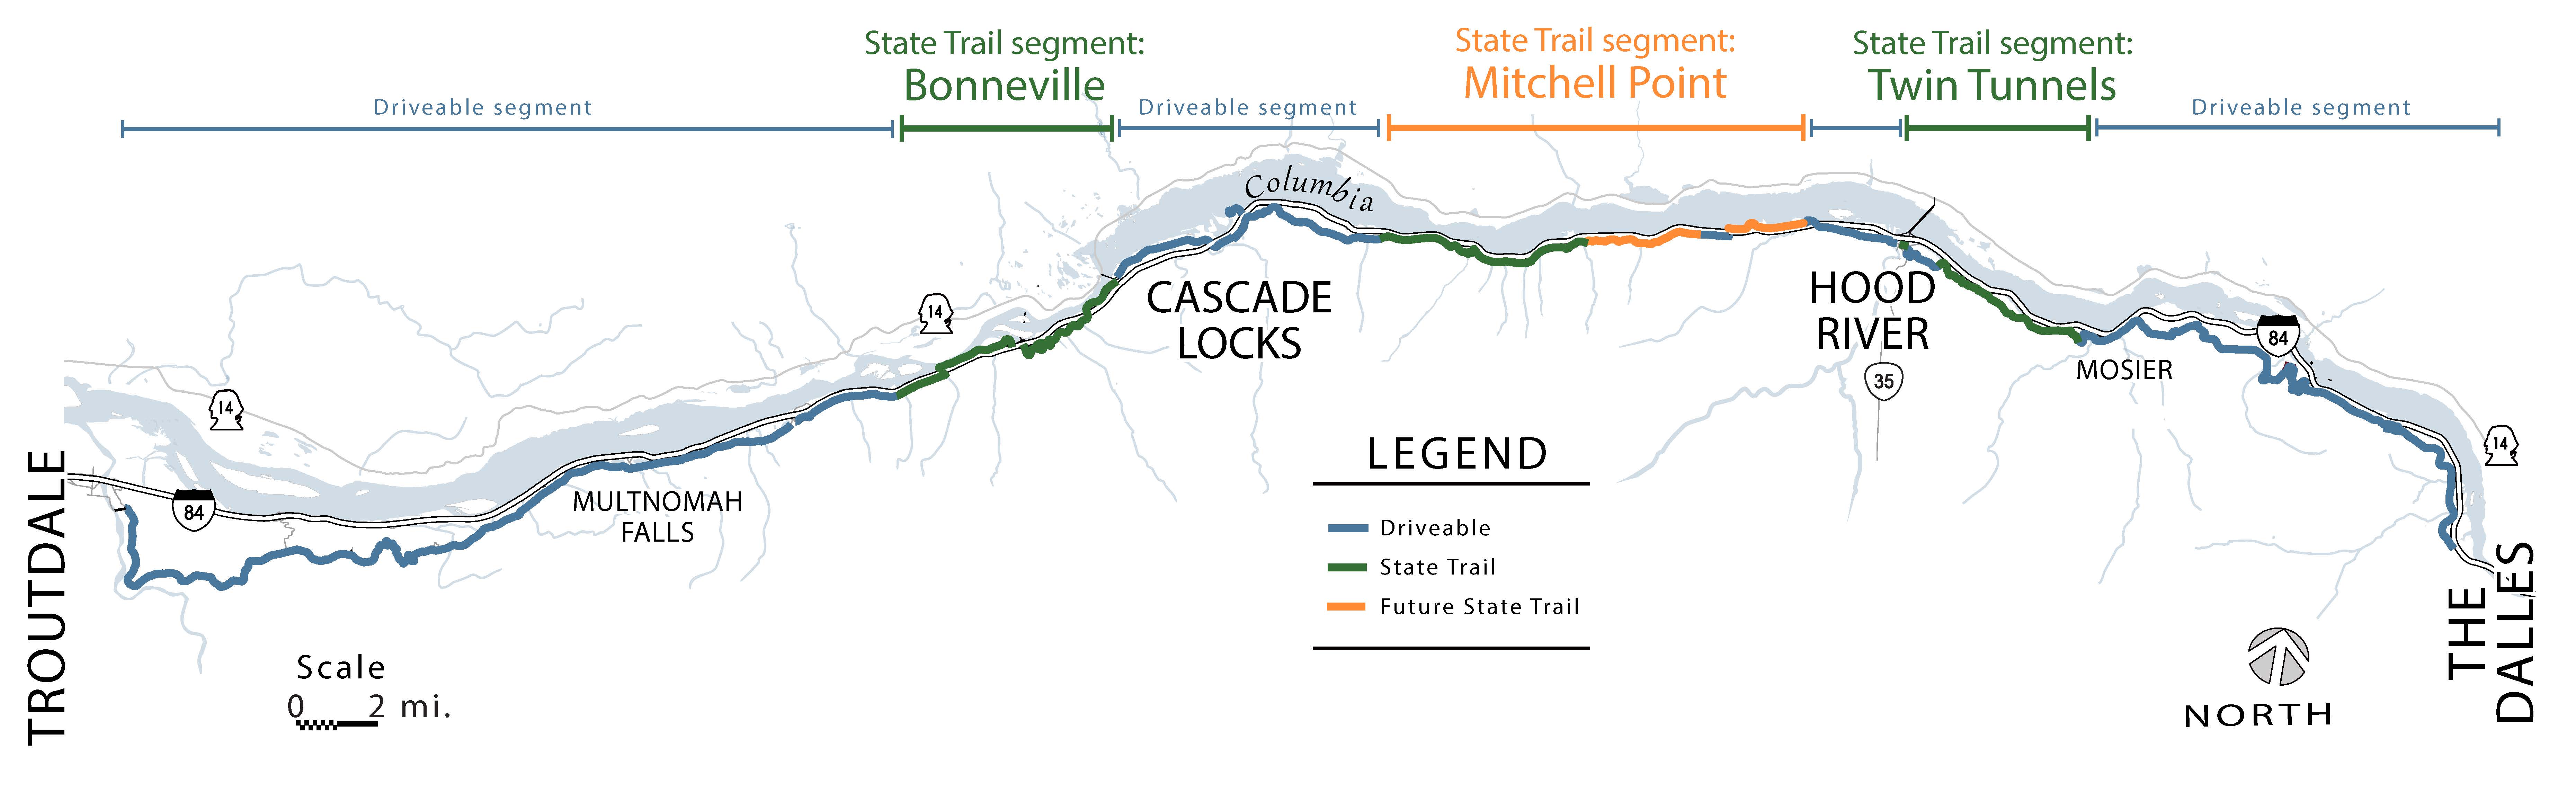 Columbia River Gorge Hikes - Hiking in Portland, Oregon and Washington